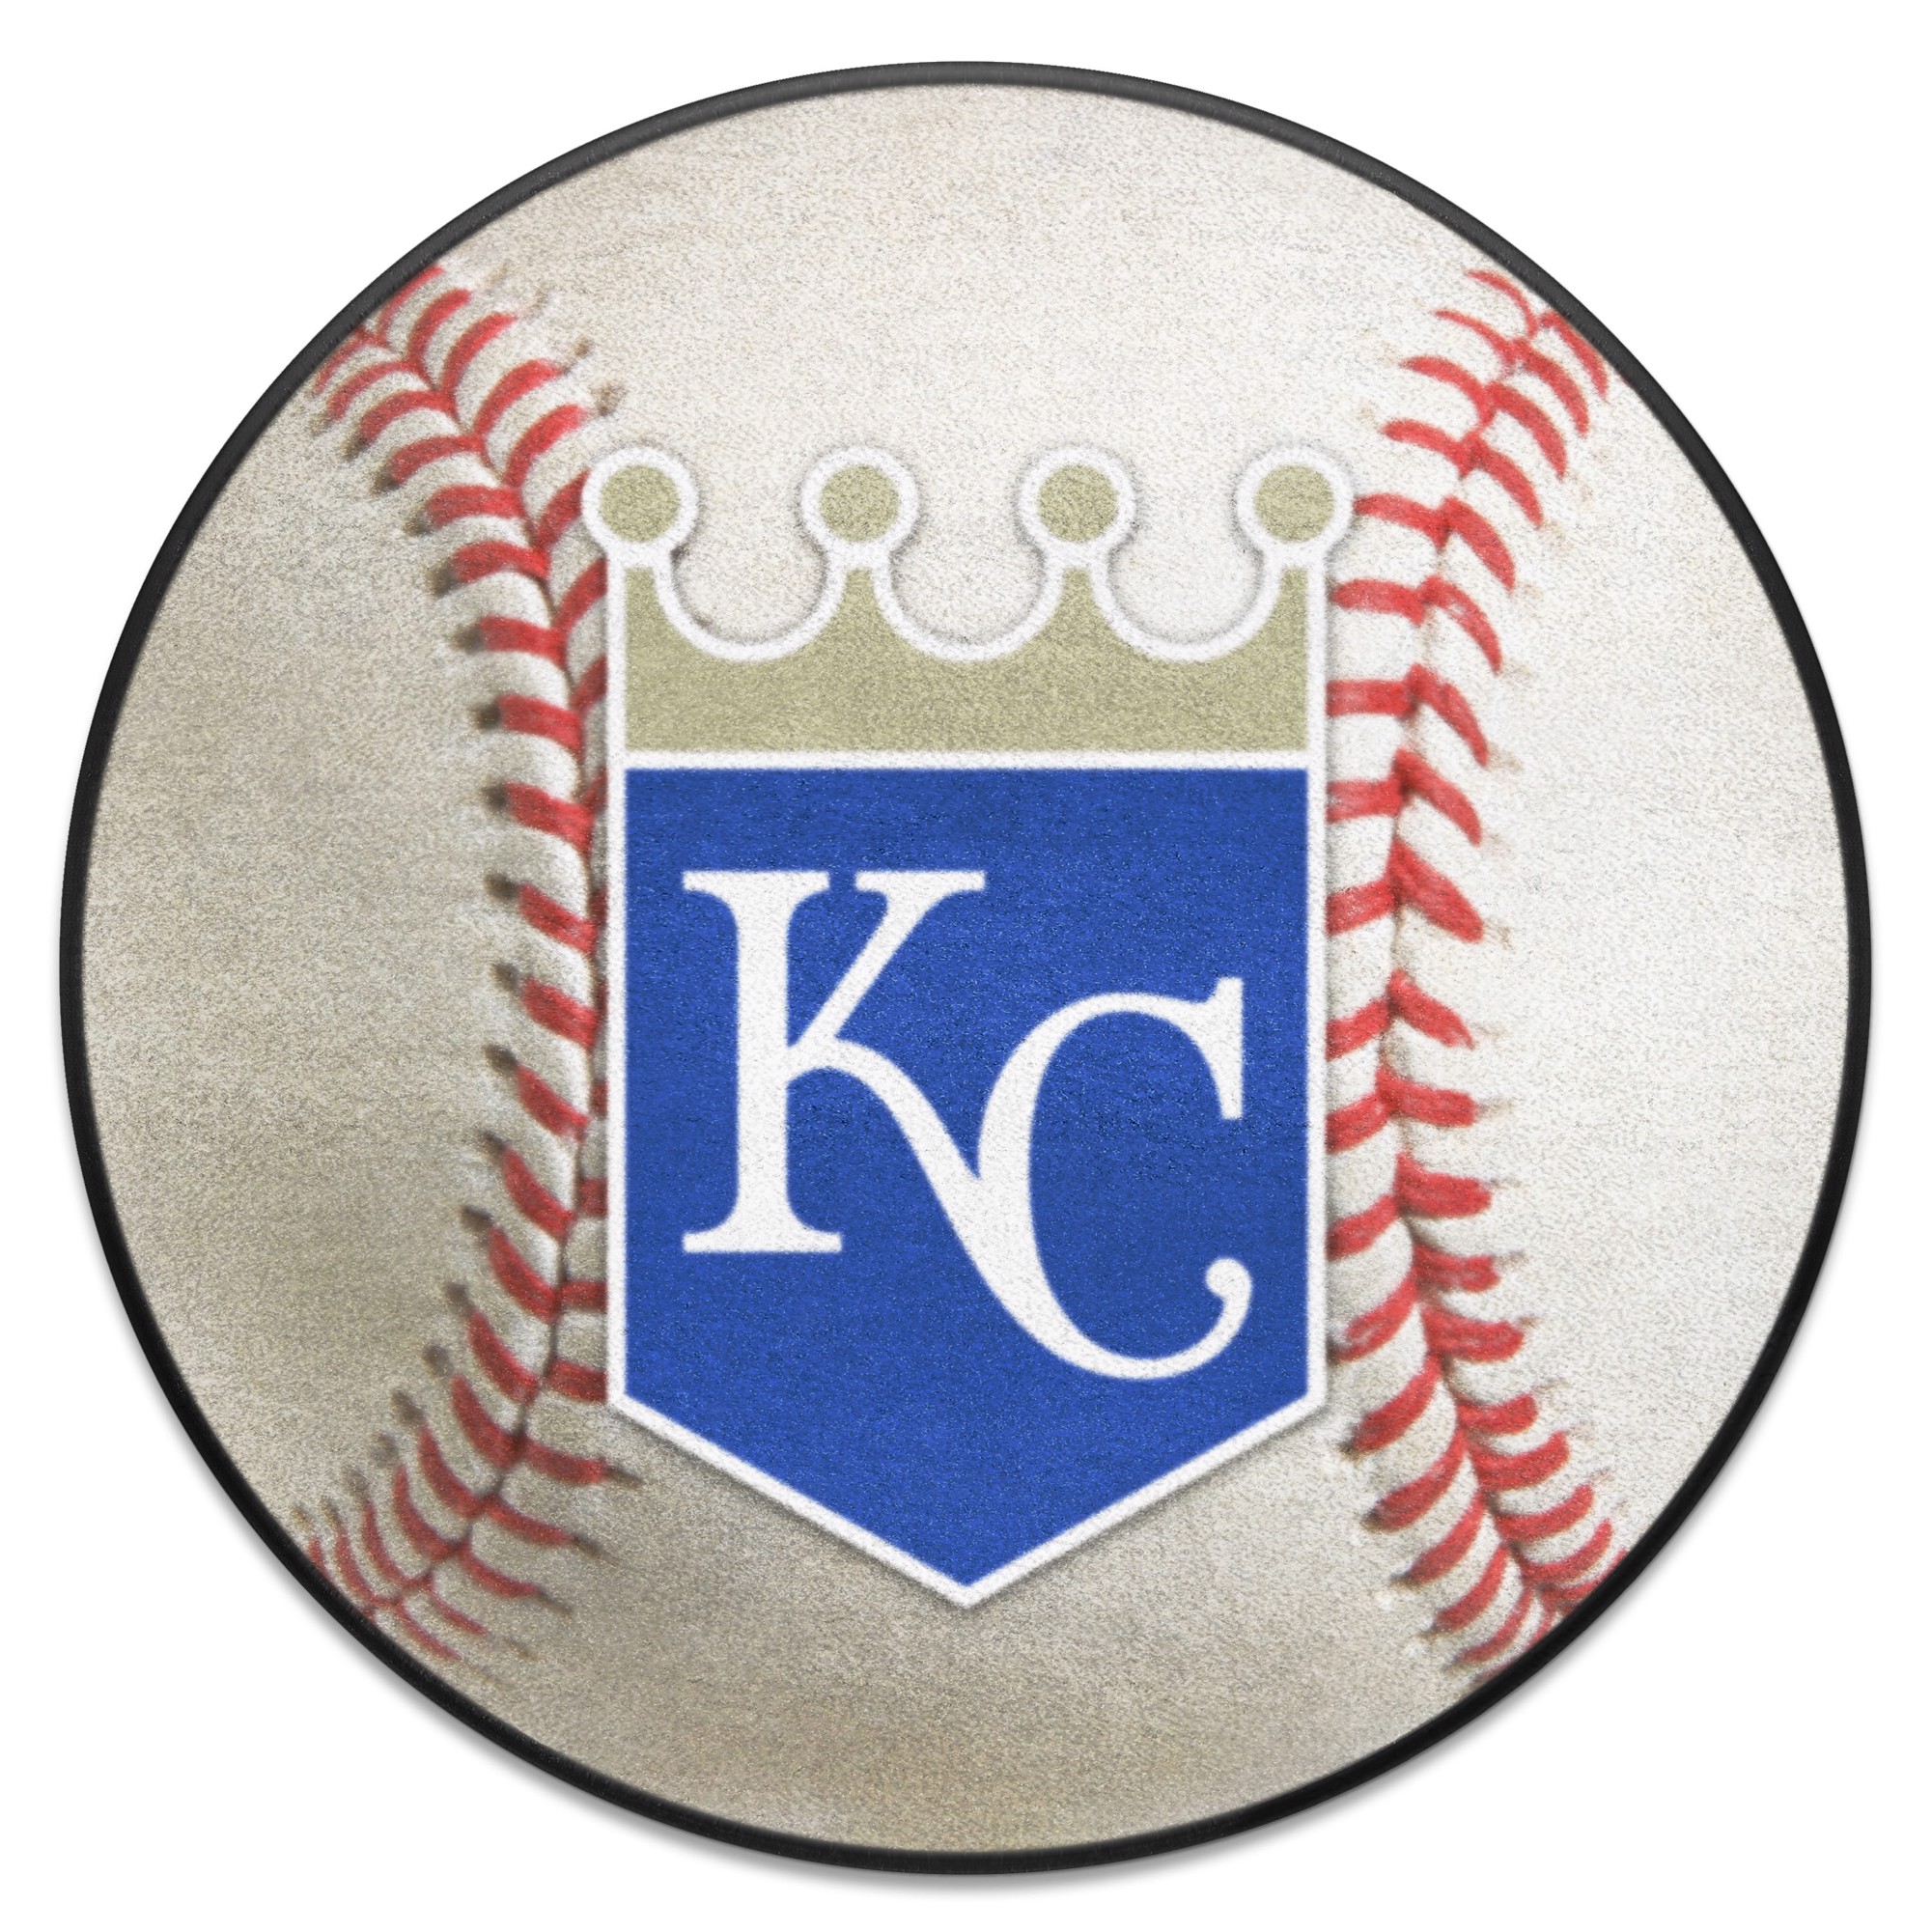 Kansas City Royals show off updated uniforms for next season